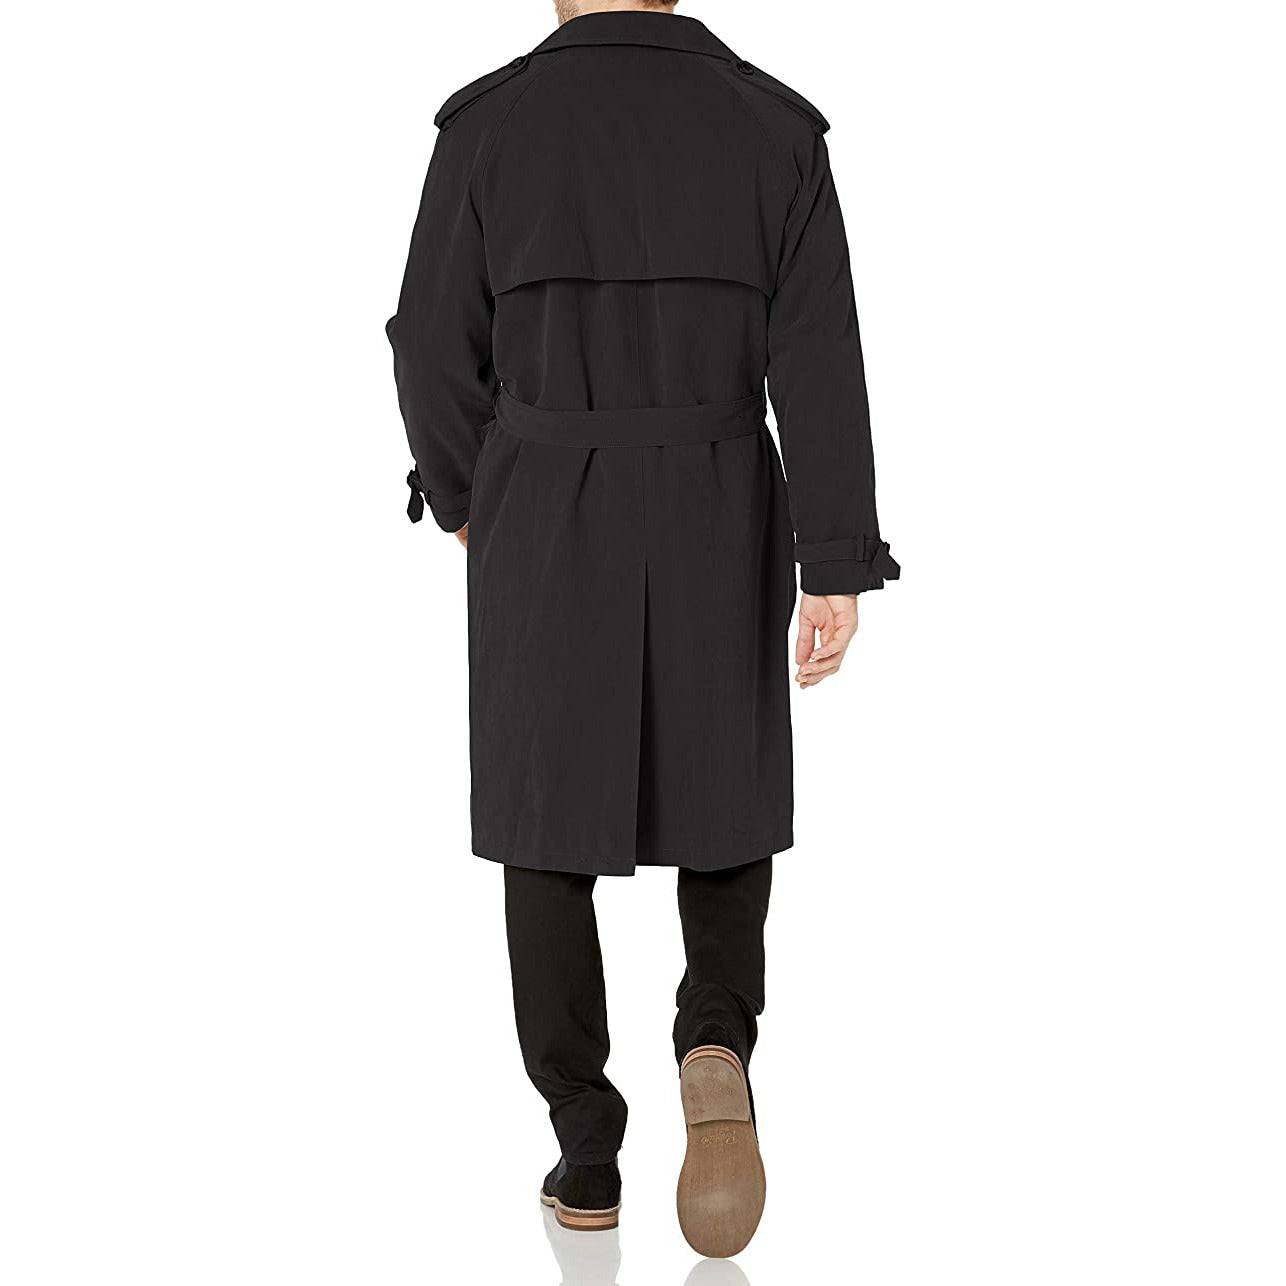 London Fog Men's Iconic Trench Coat - Zooloo Leather